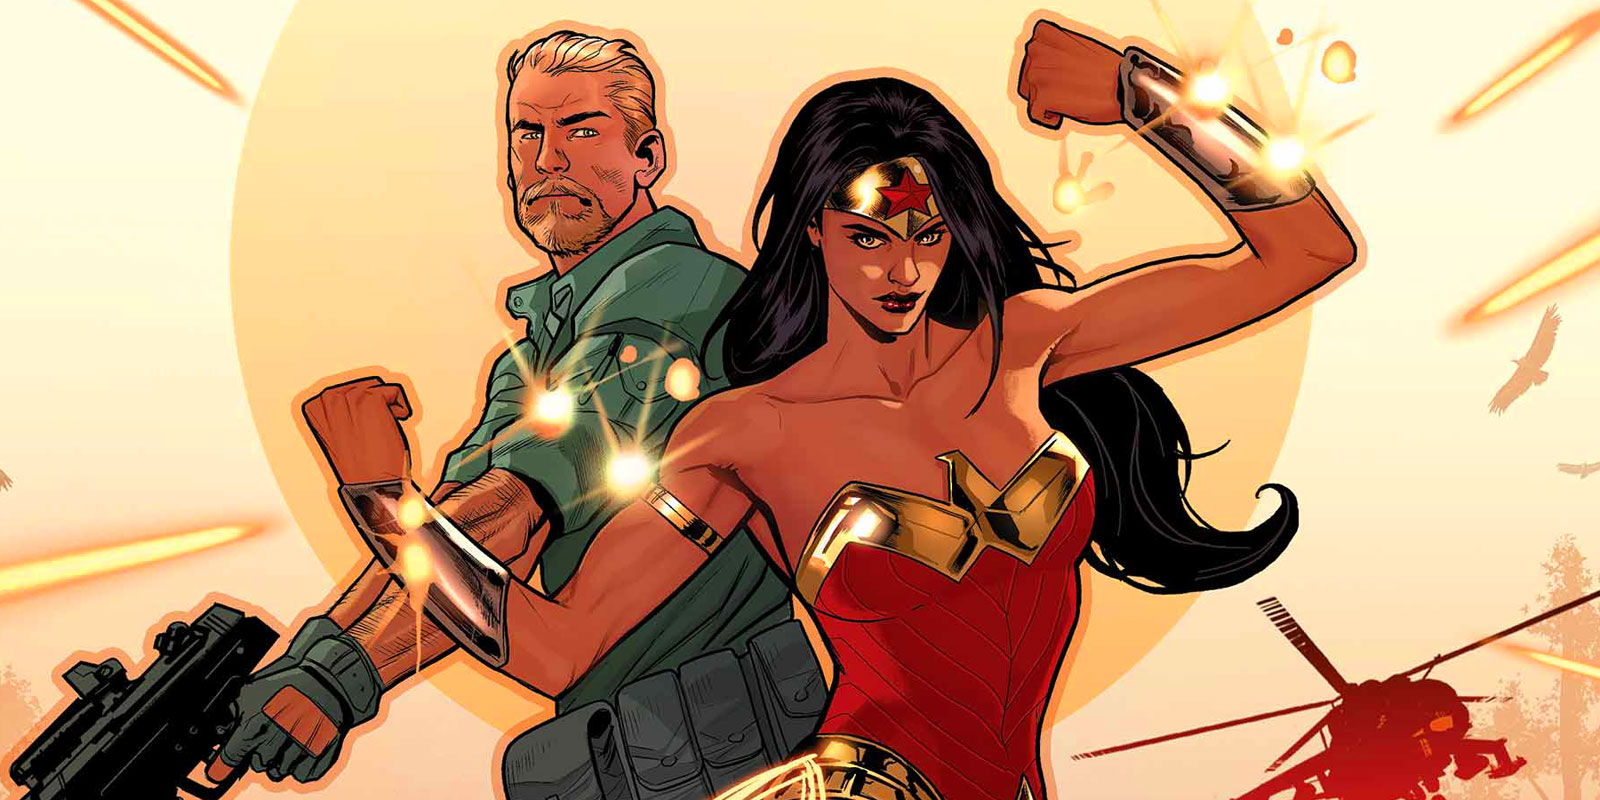 Steve Trevor with Wonder Woman